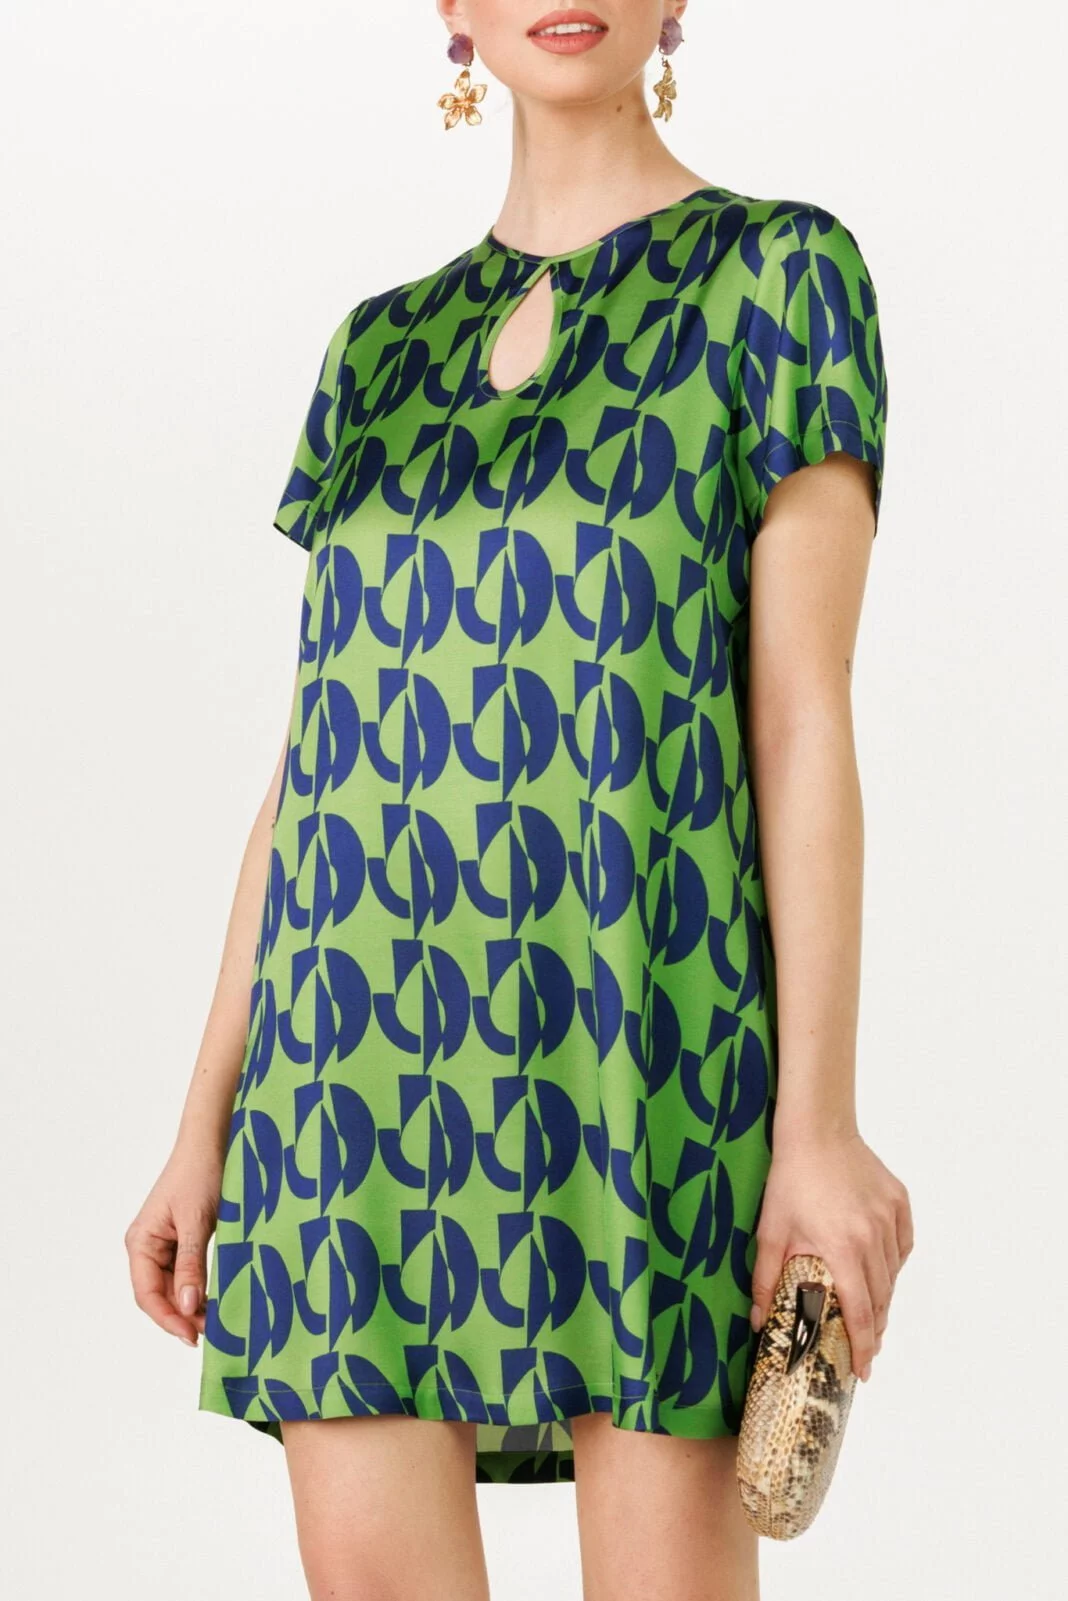 Chic Summer Mini Dress - Green Navy Geometric Print Luxurious Party Cocktail, Keyhole Neckline